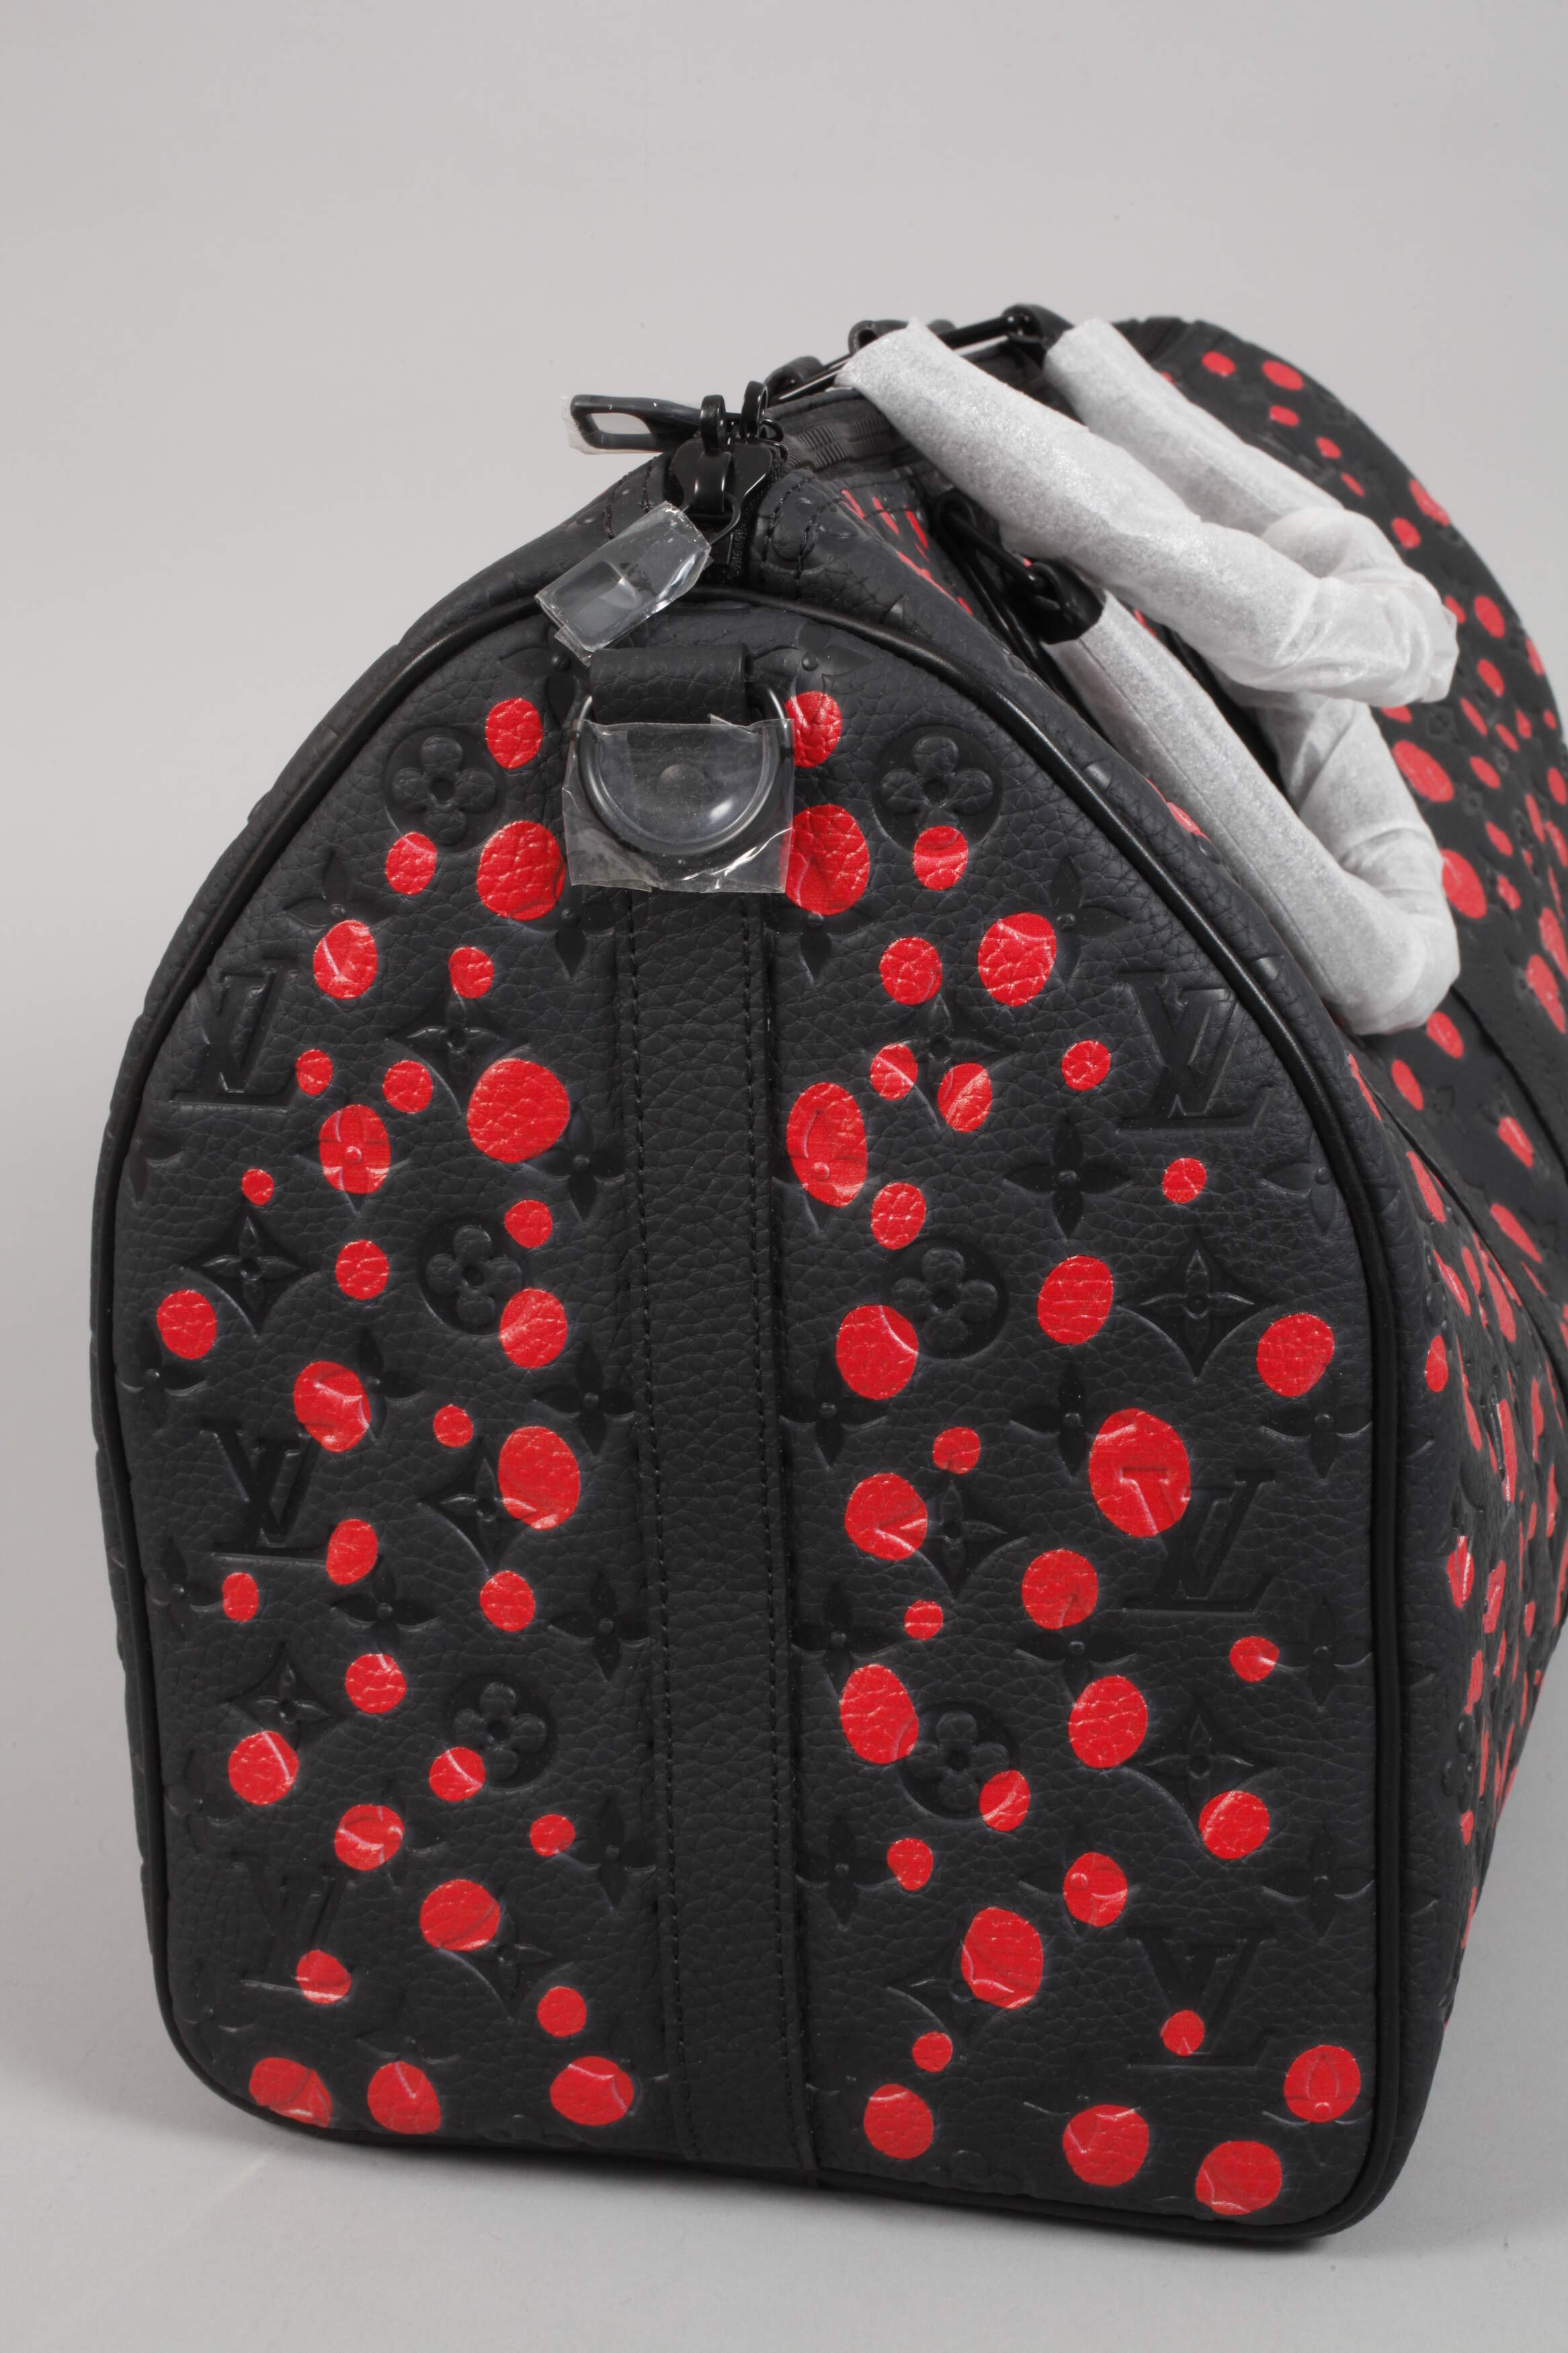 Louis Vuitton travelling bag - Image 5 of 7